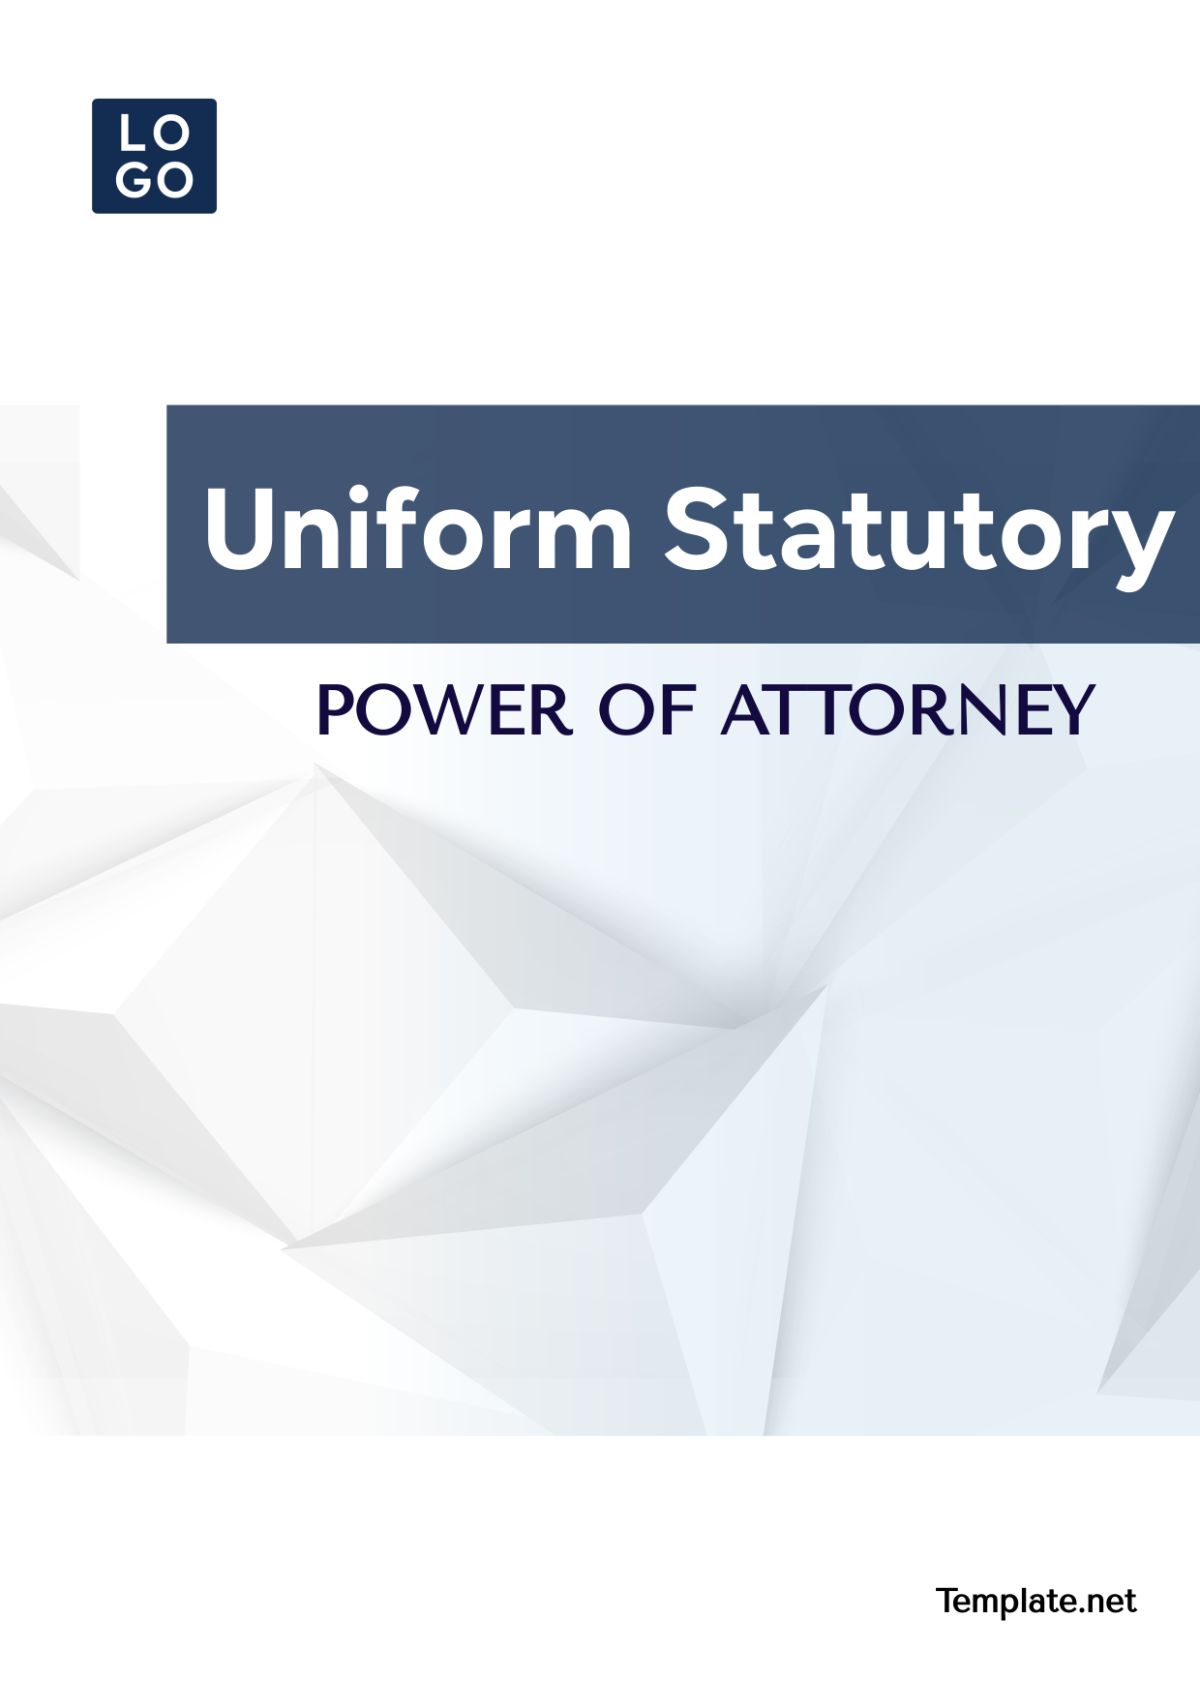 Uniform Statutory Power of Attorney Template